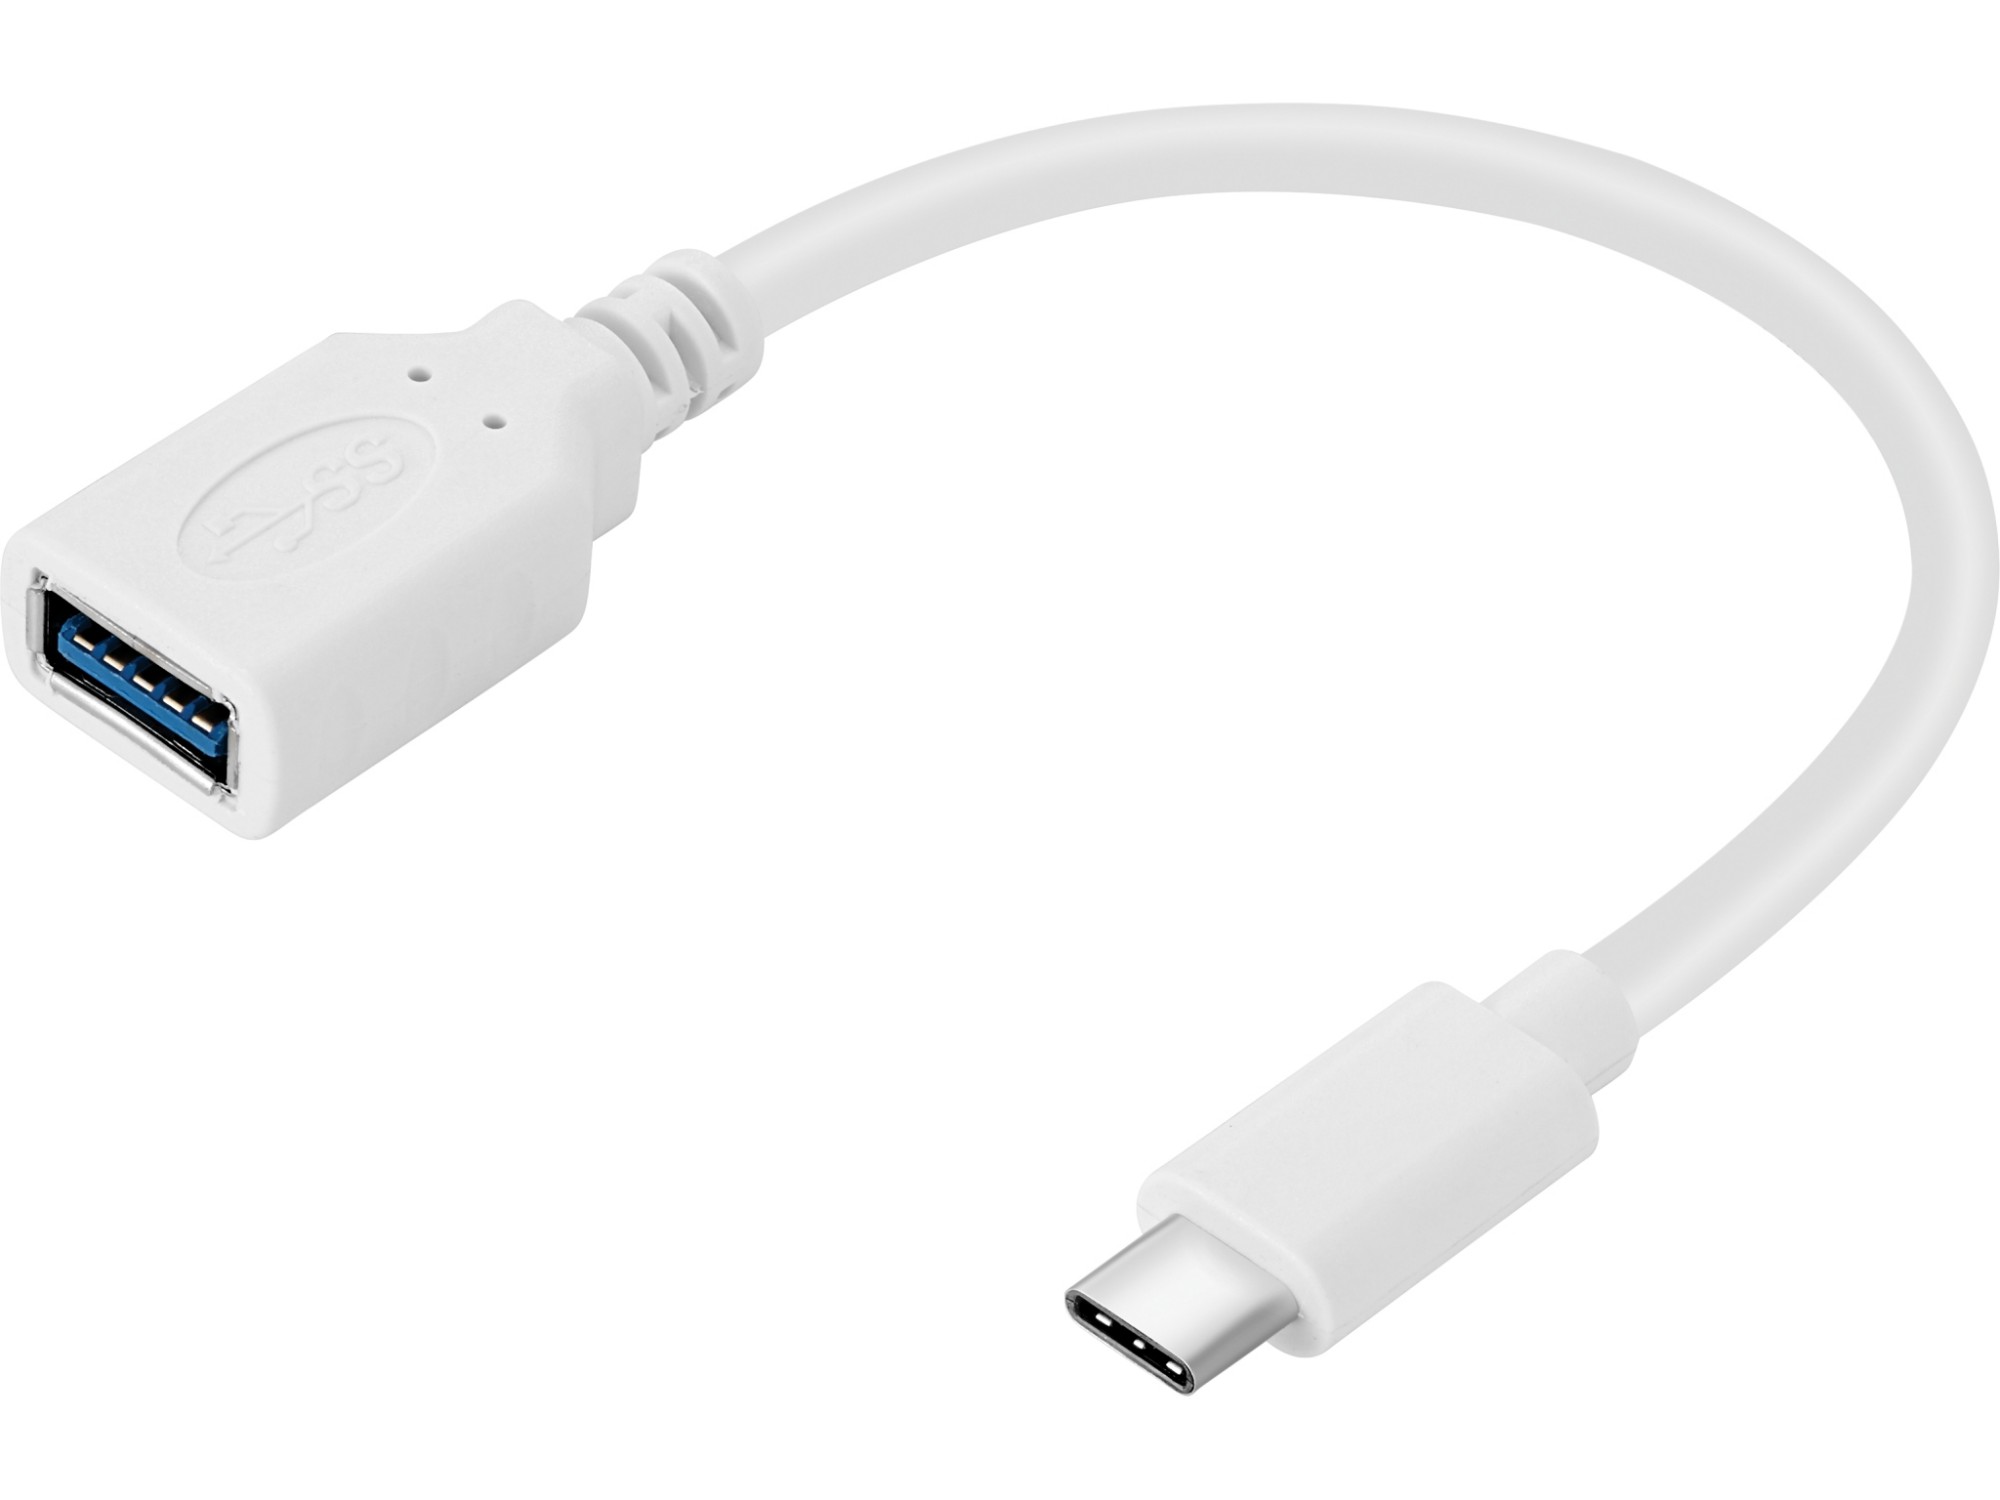 Photos - Cable (video, audio, USB) Sandberg USB-C to USB 3.0 Converter 136-05 